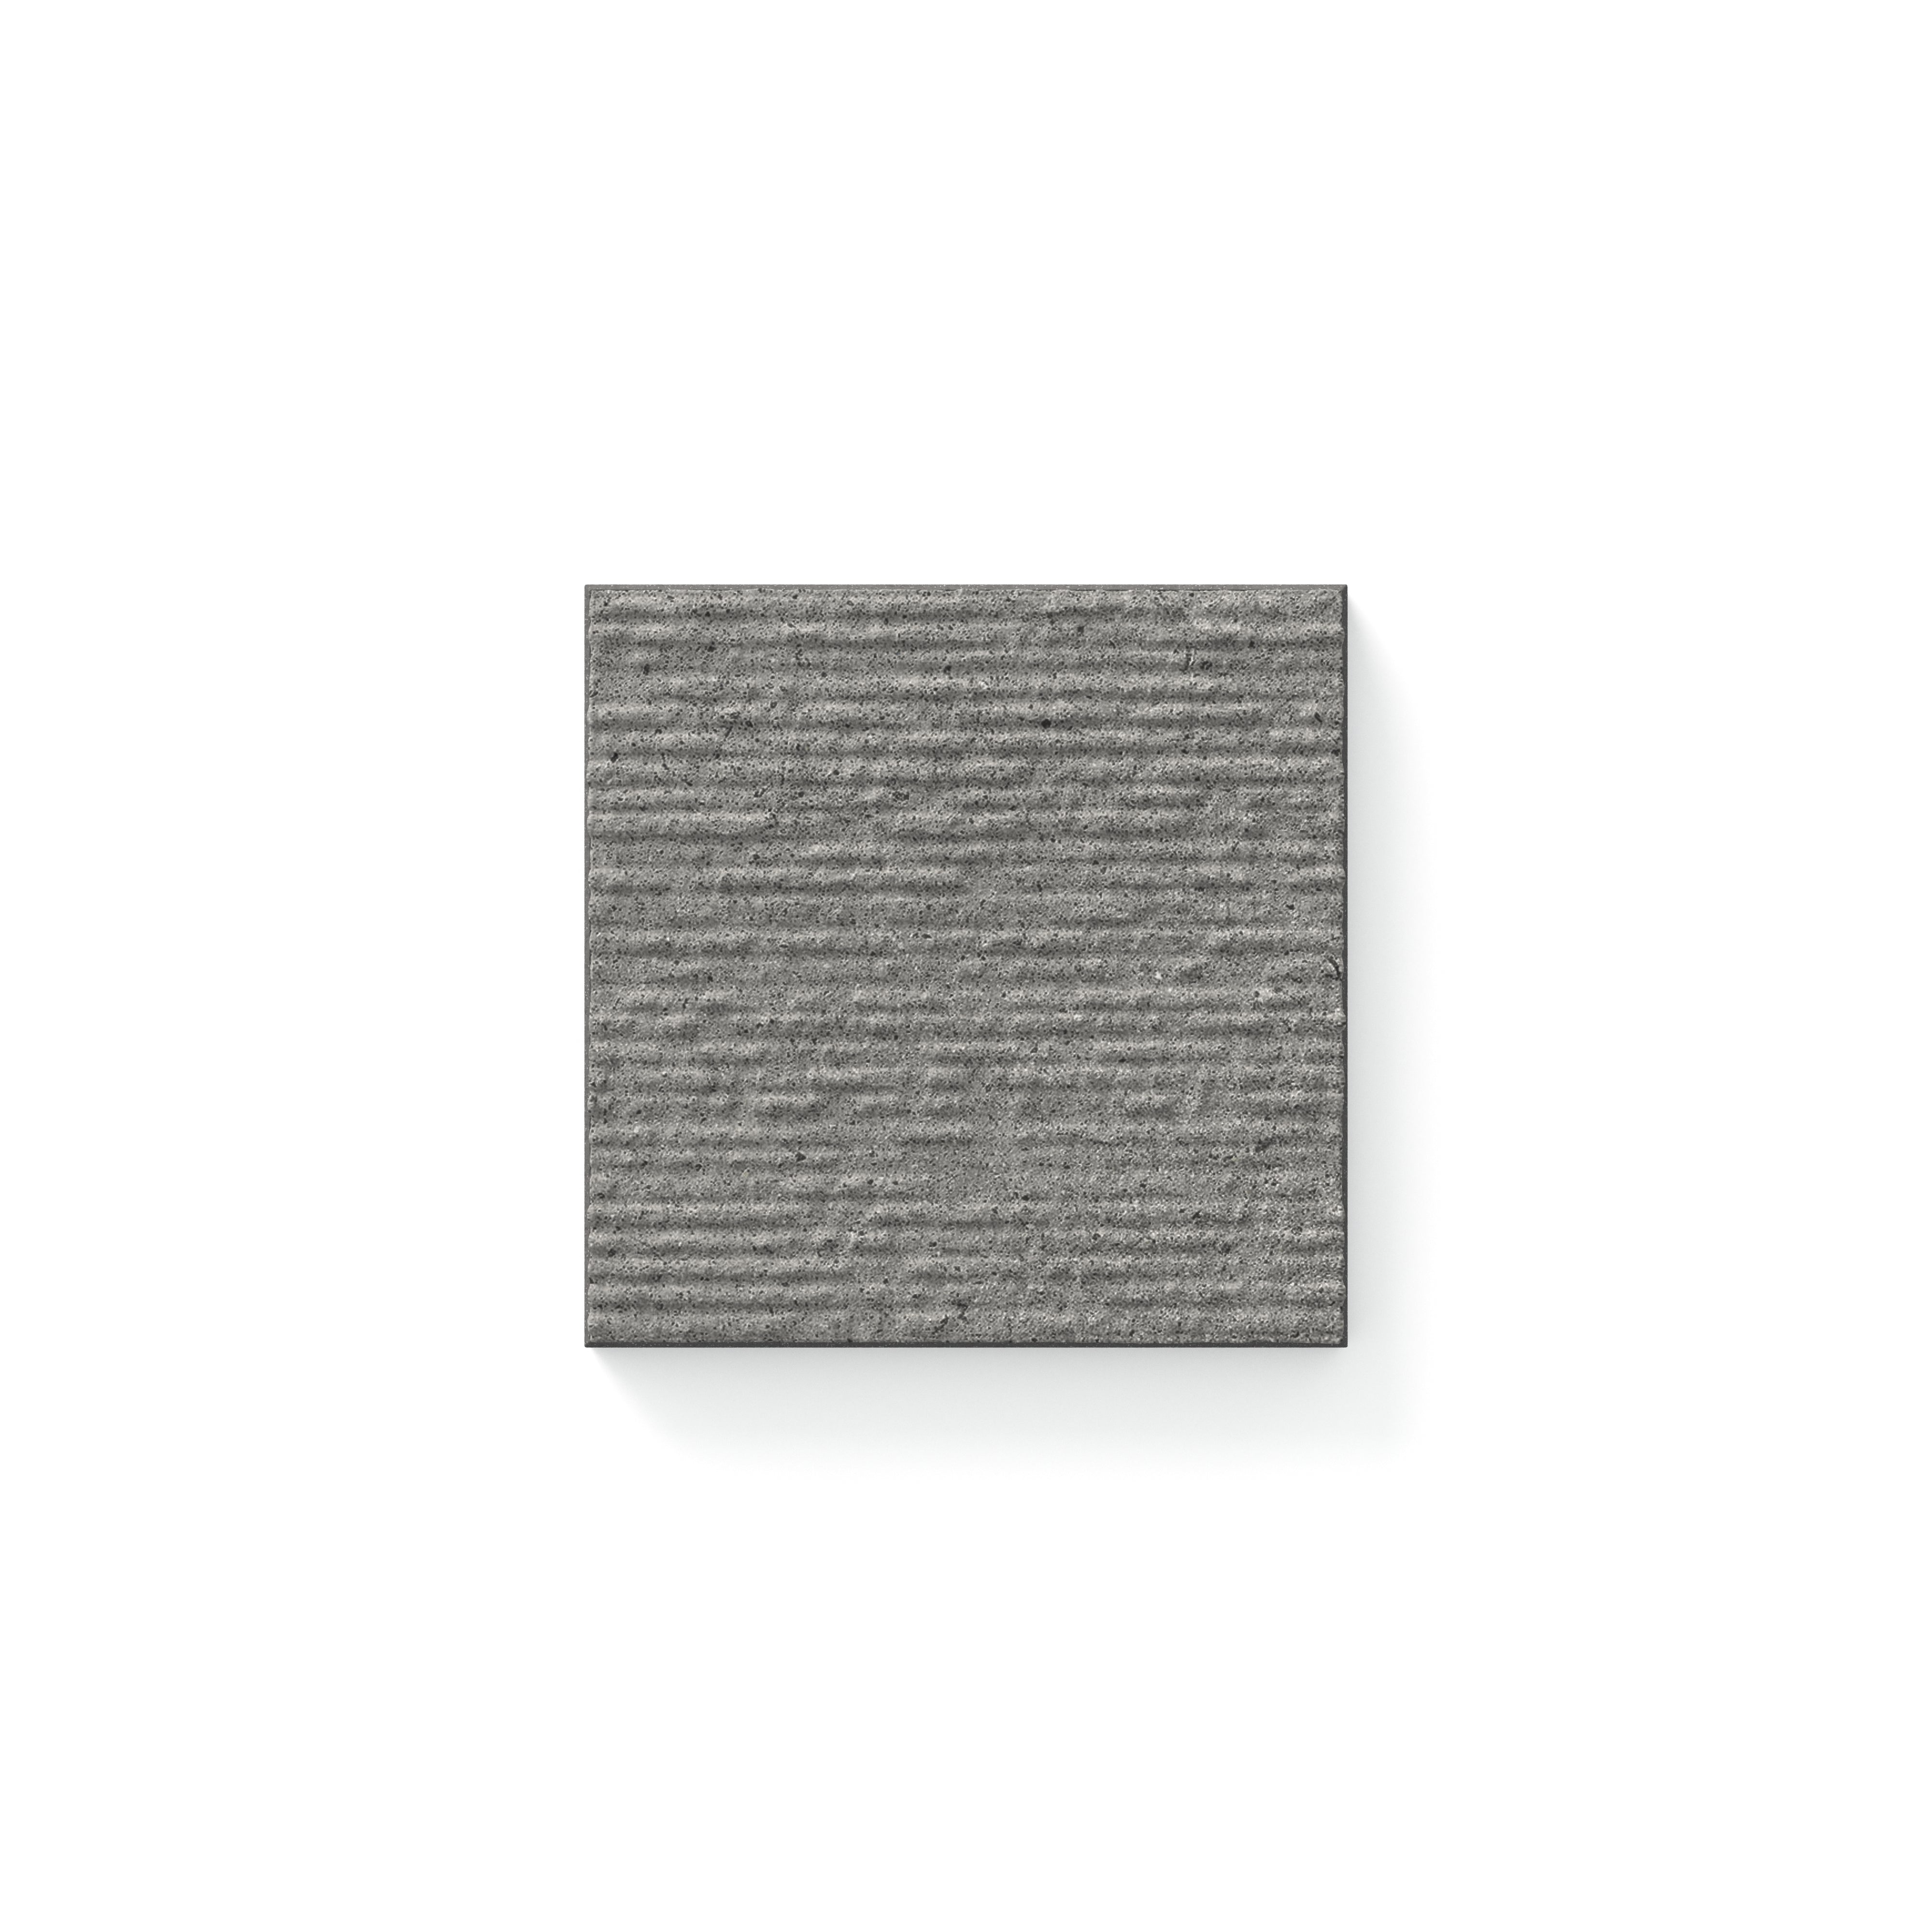 Palmer Chiseled Charcoal 4x4 Tile Sample